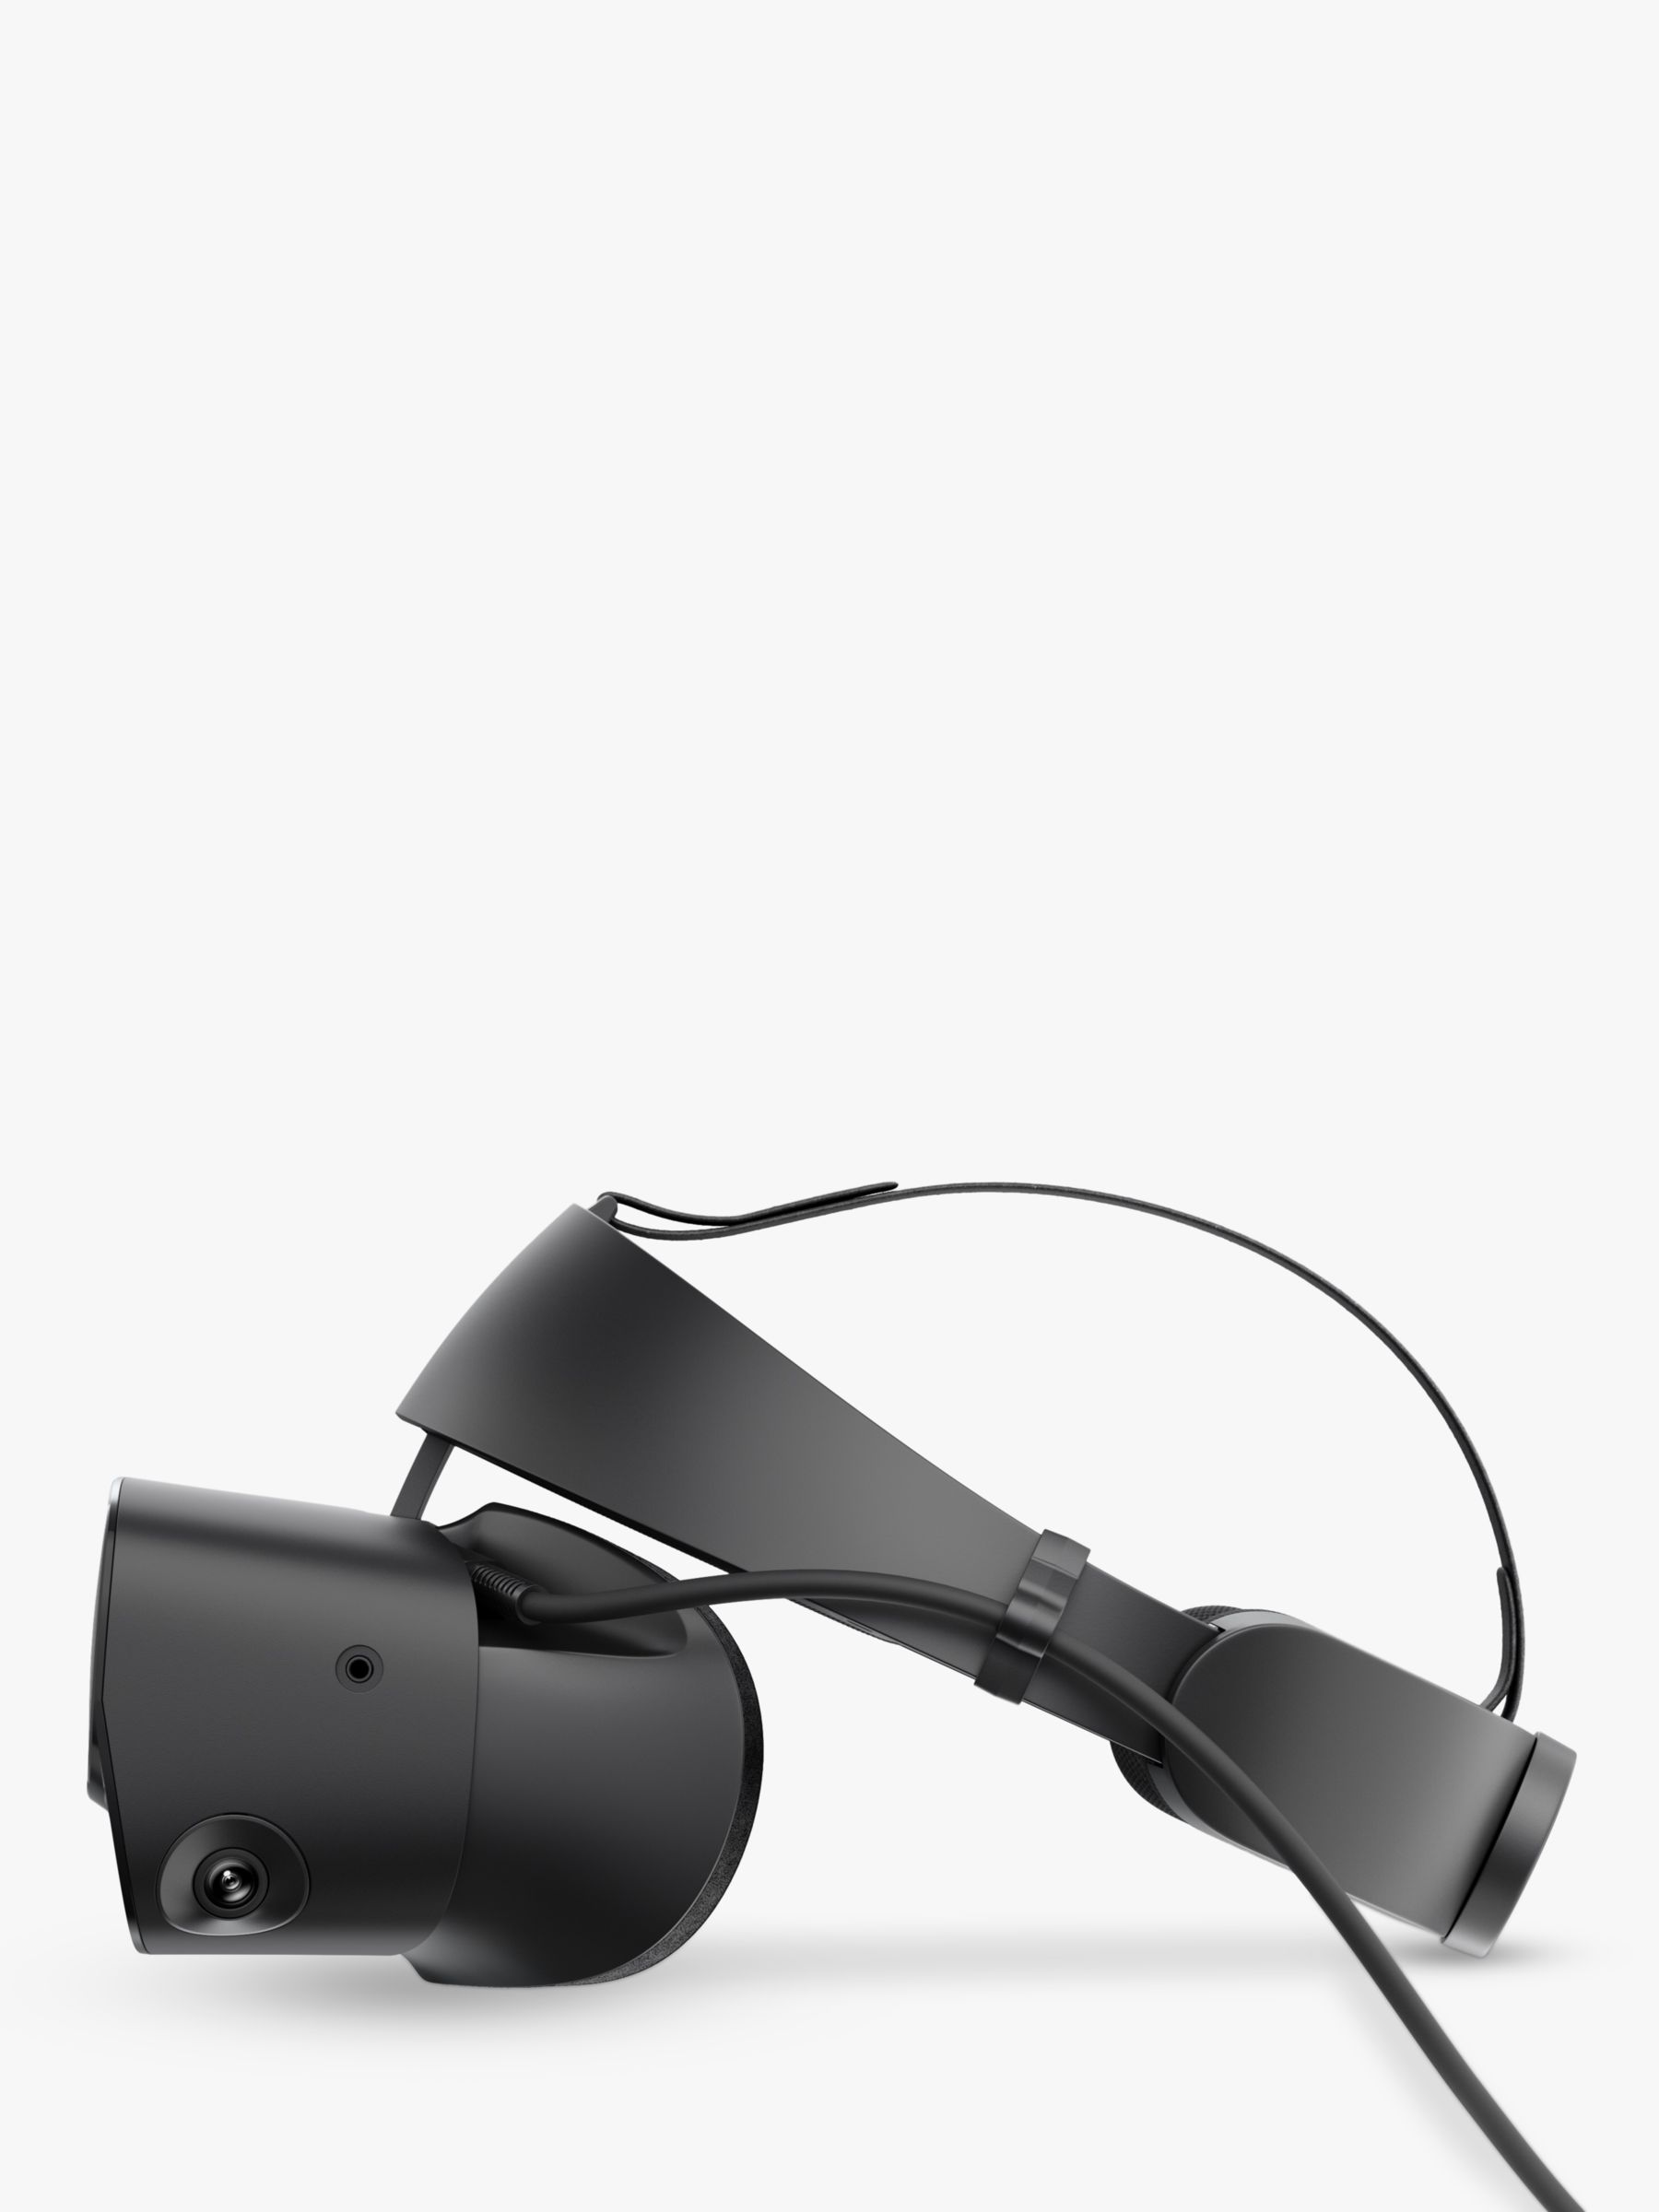 oculus vr buy online